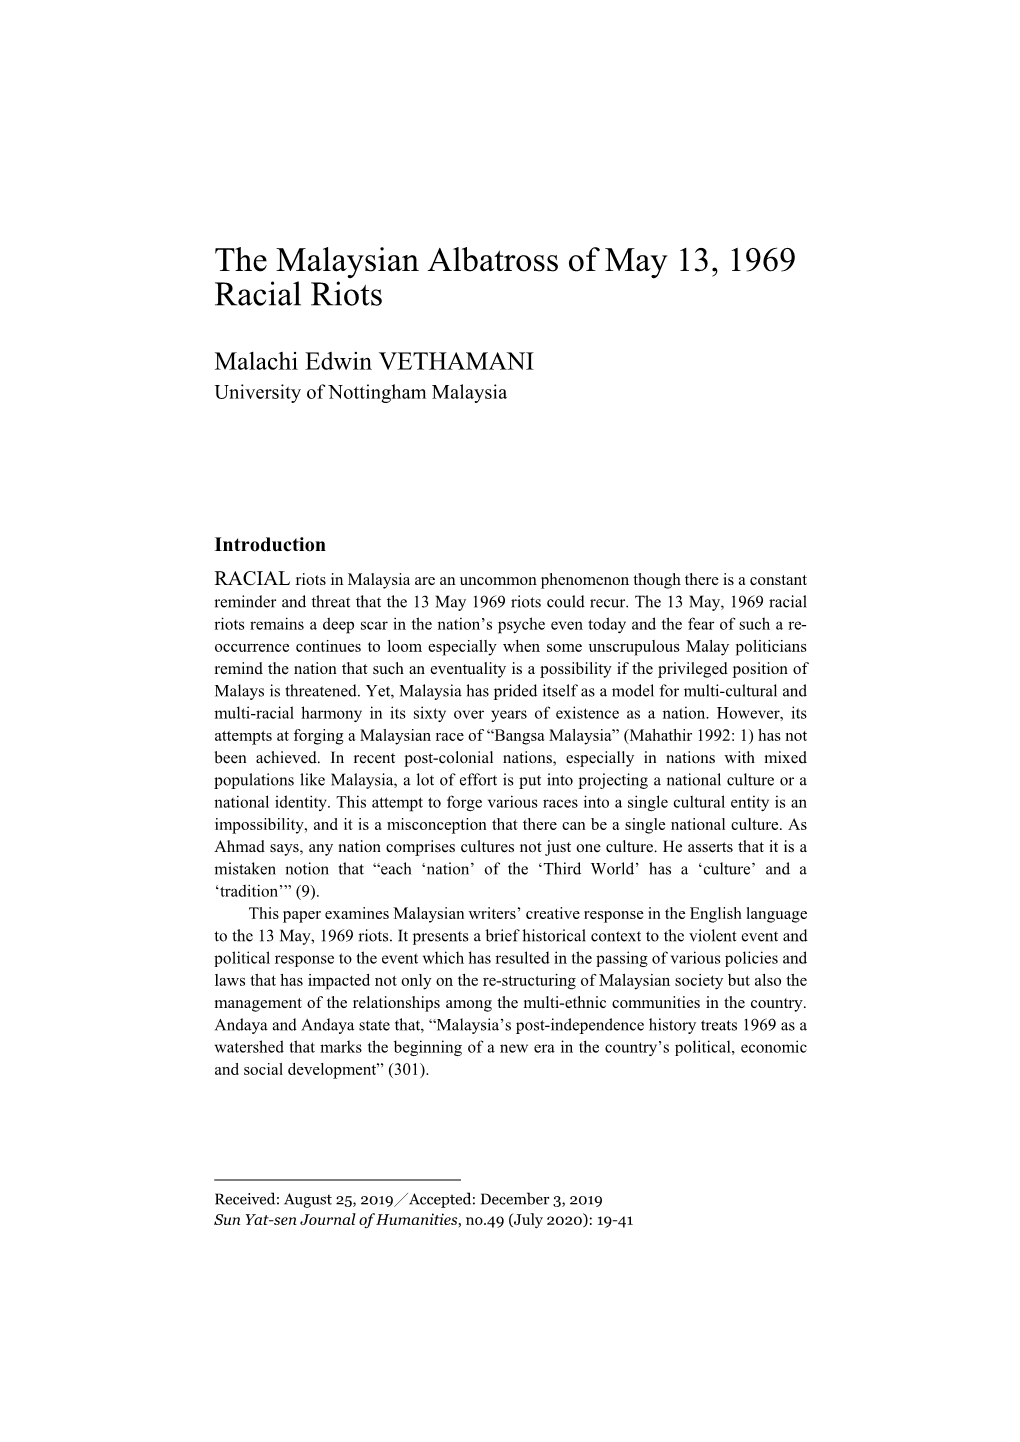 The Malaysian Albatross of May 13, 1969 Racial Riots